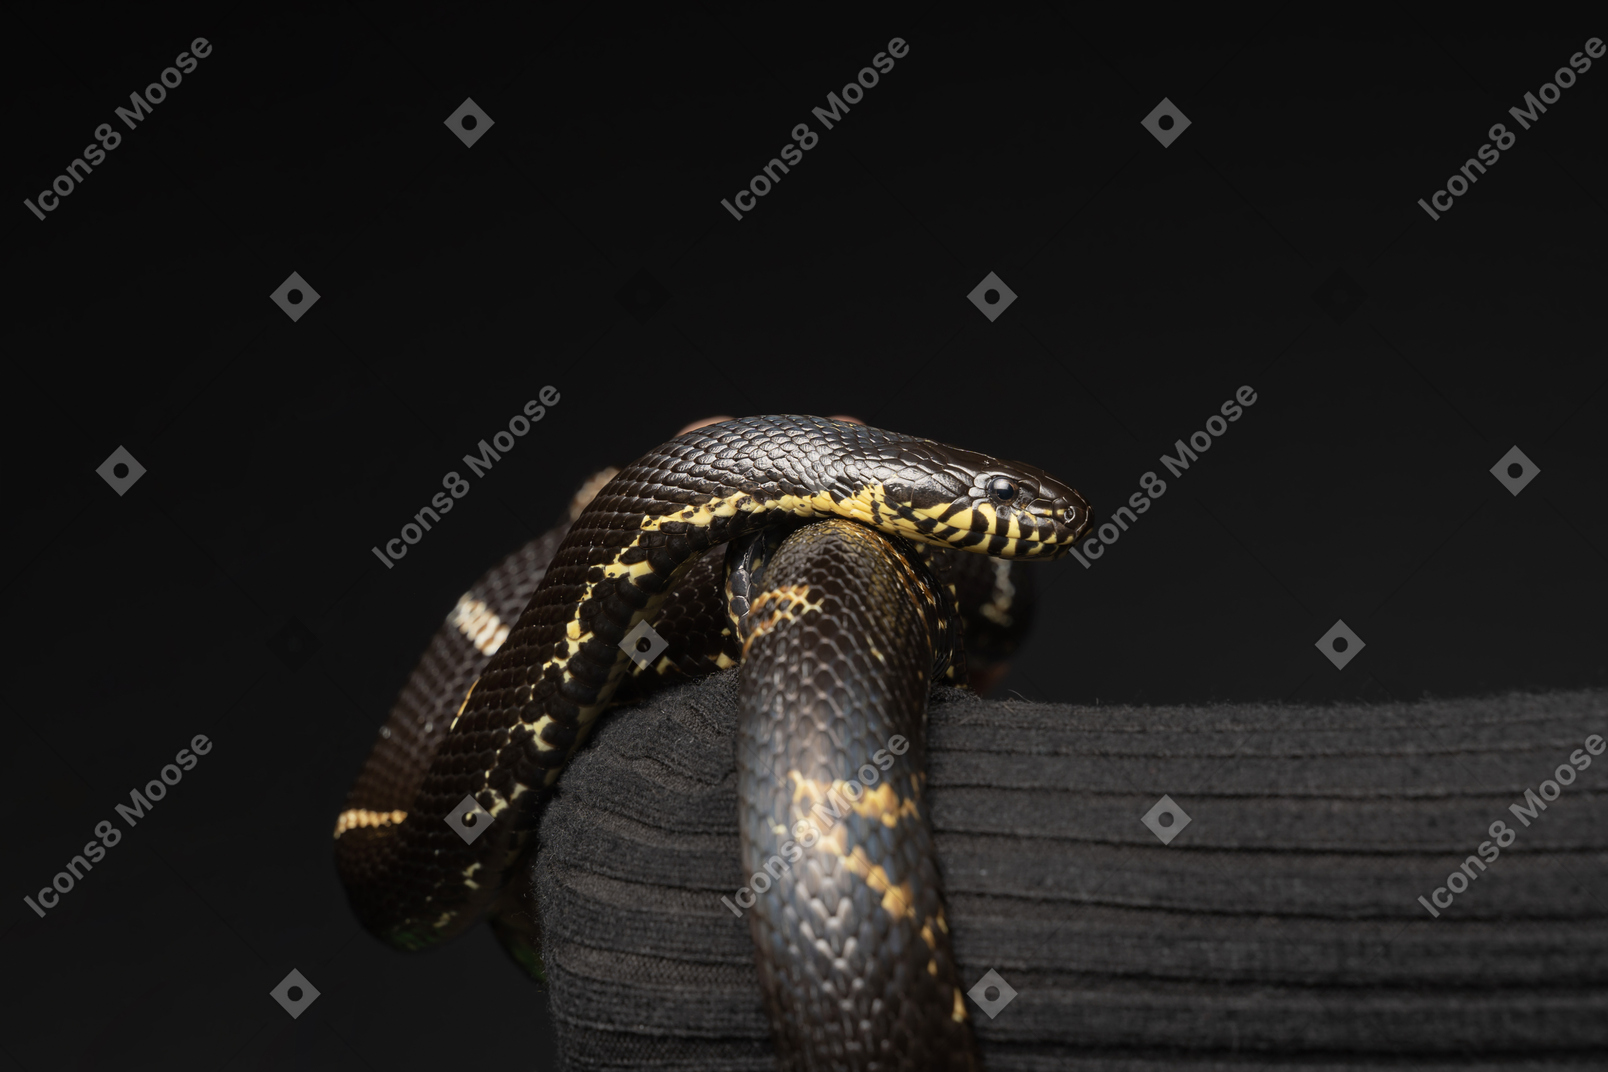 Black striped snake curving on human arm